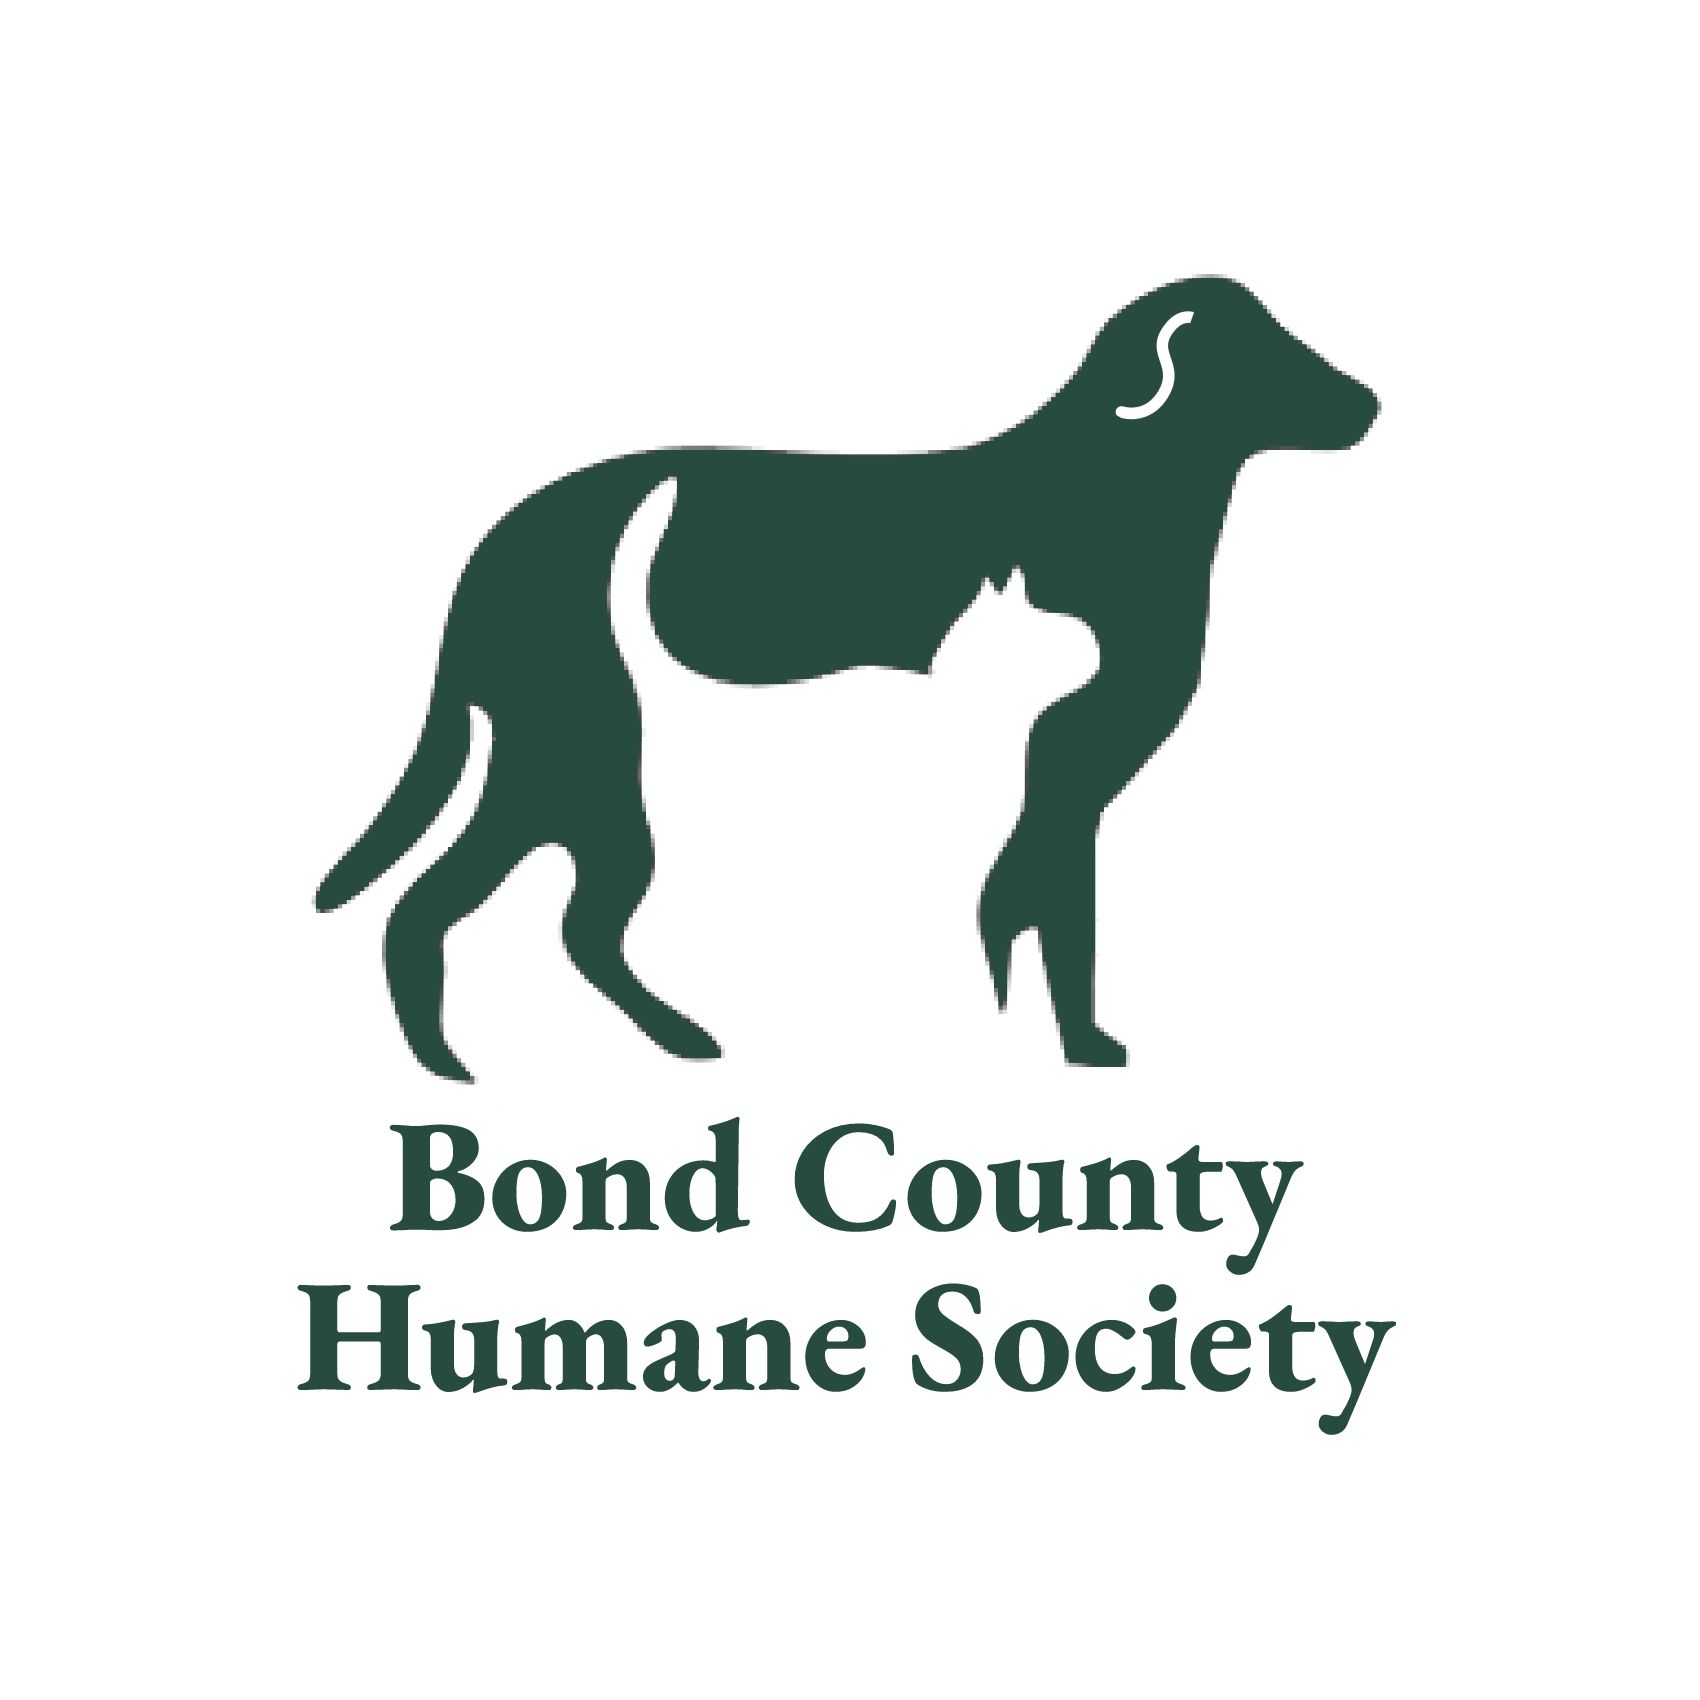 logo Bond County Humane Society, dog and cat